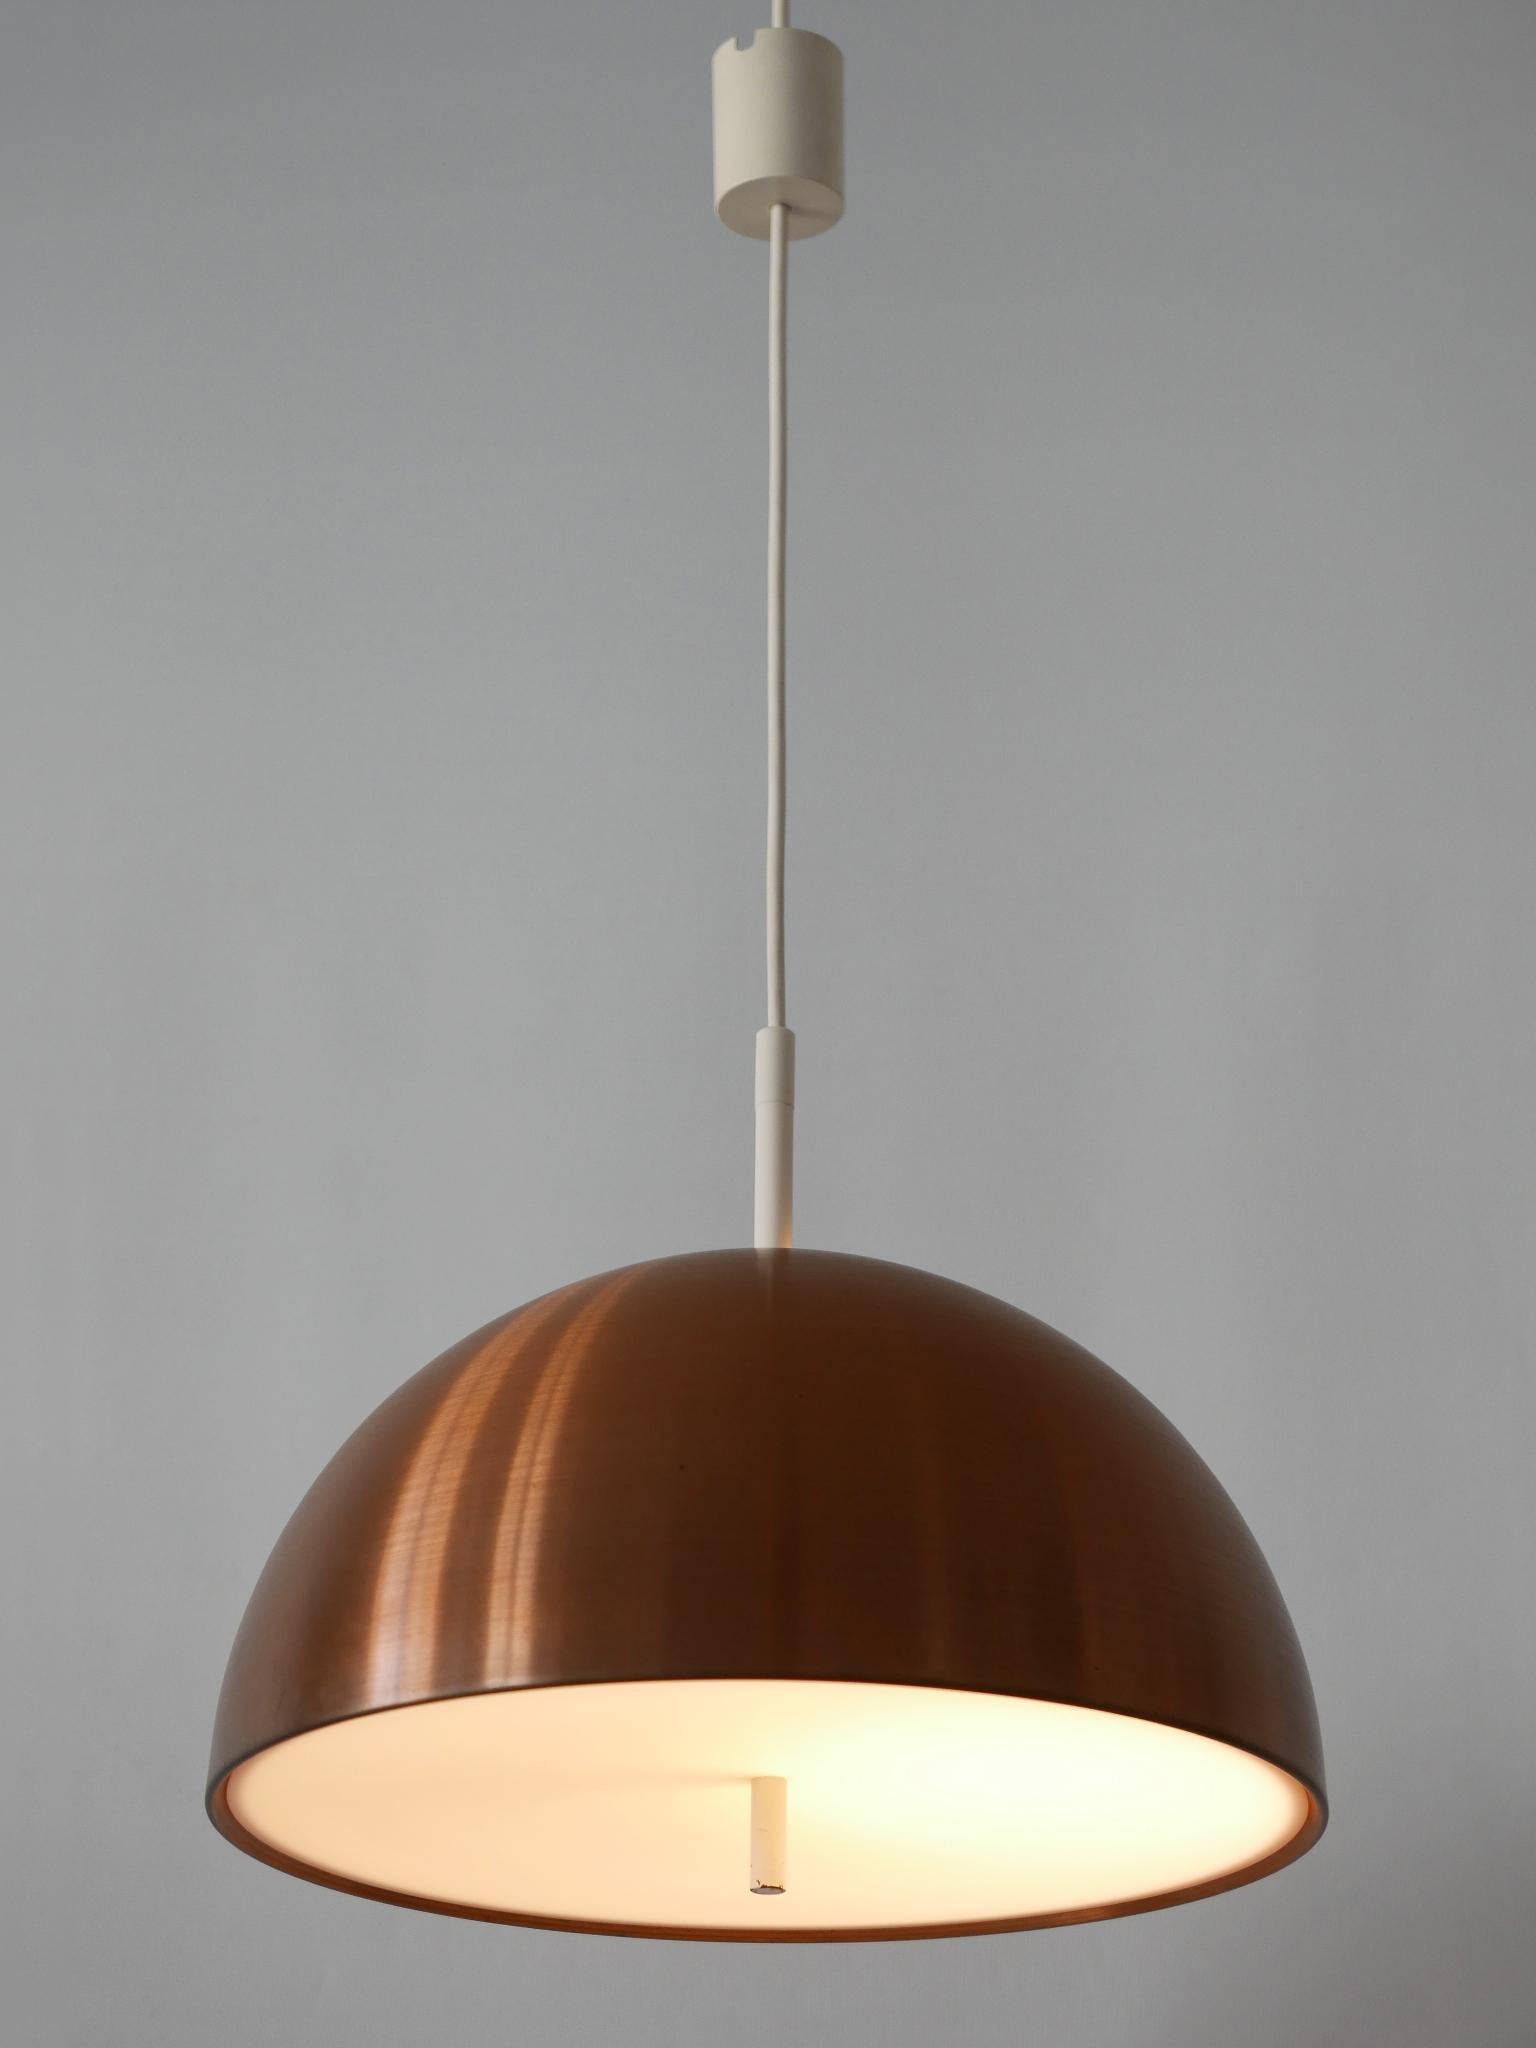 Elegant Mid-Century Modern Copper Pendant Lamp by Staff & Schwarz Germany, 1960s For Sale 9